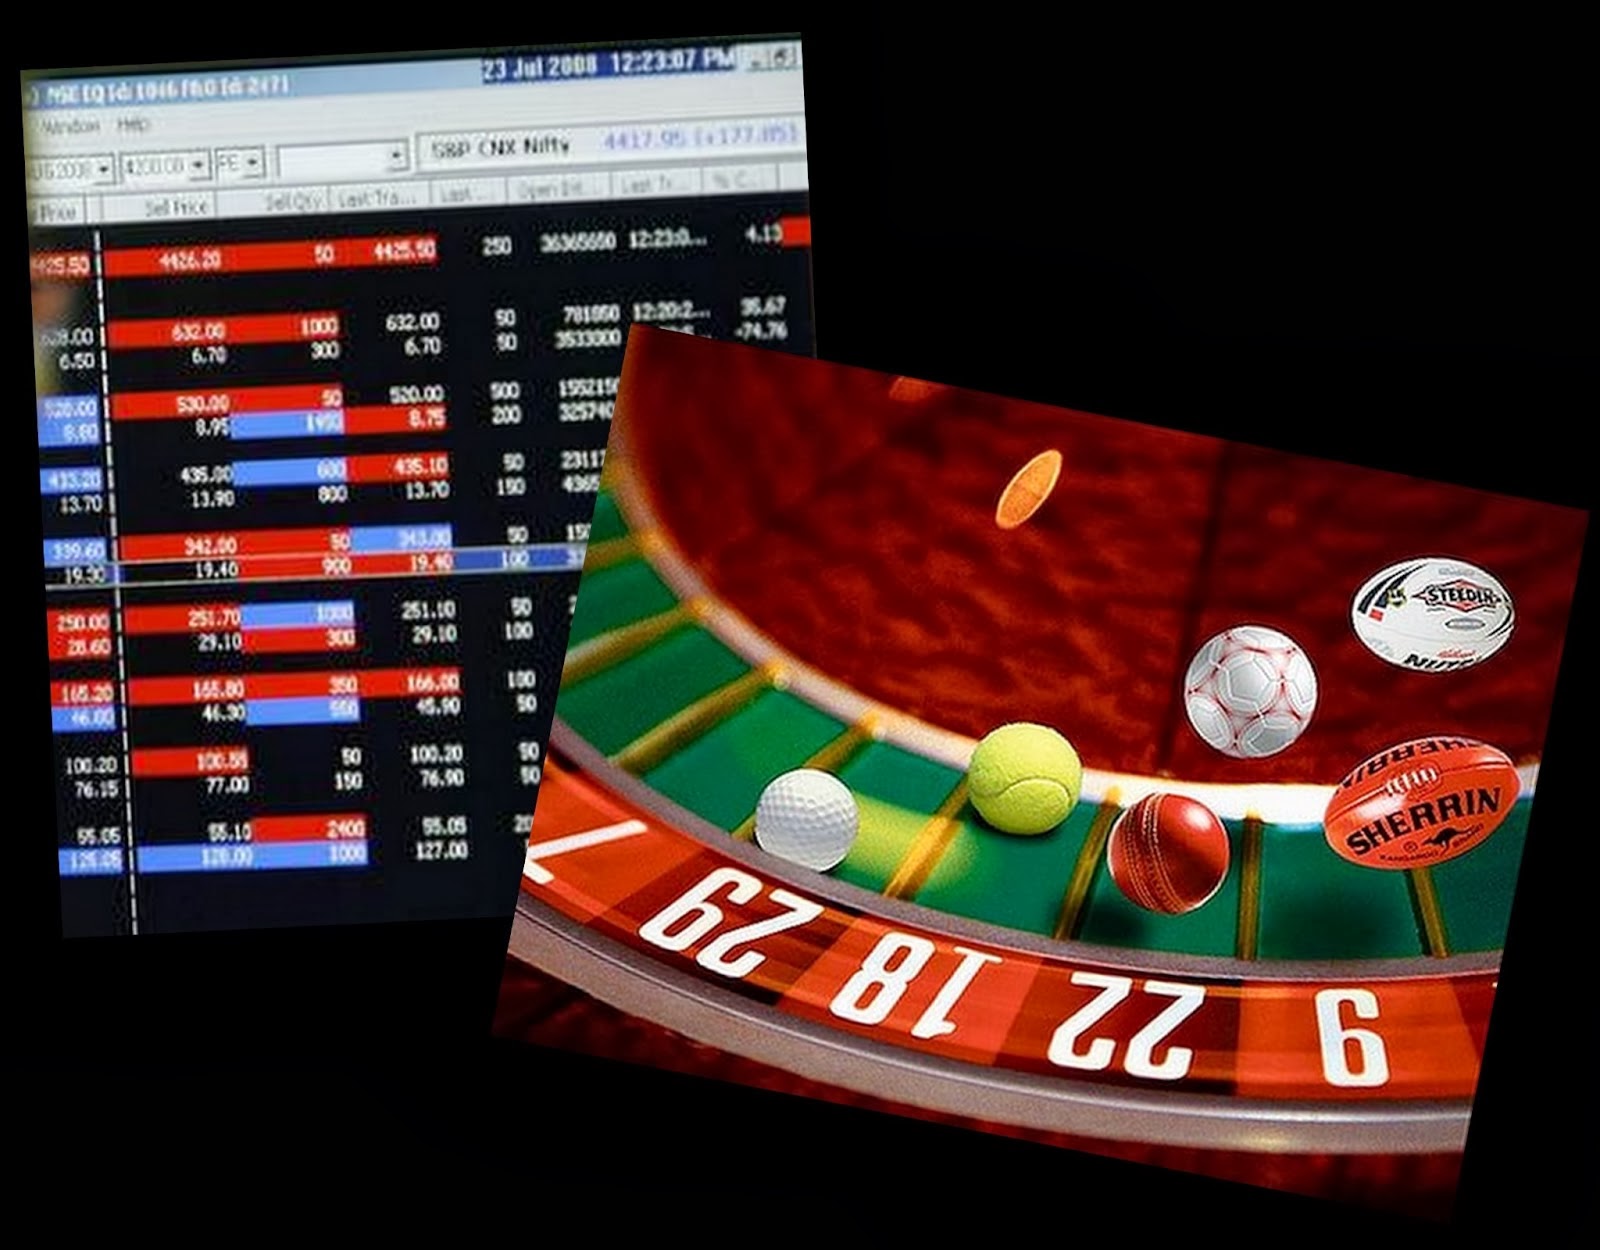 Is forex gambling or finance